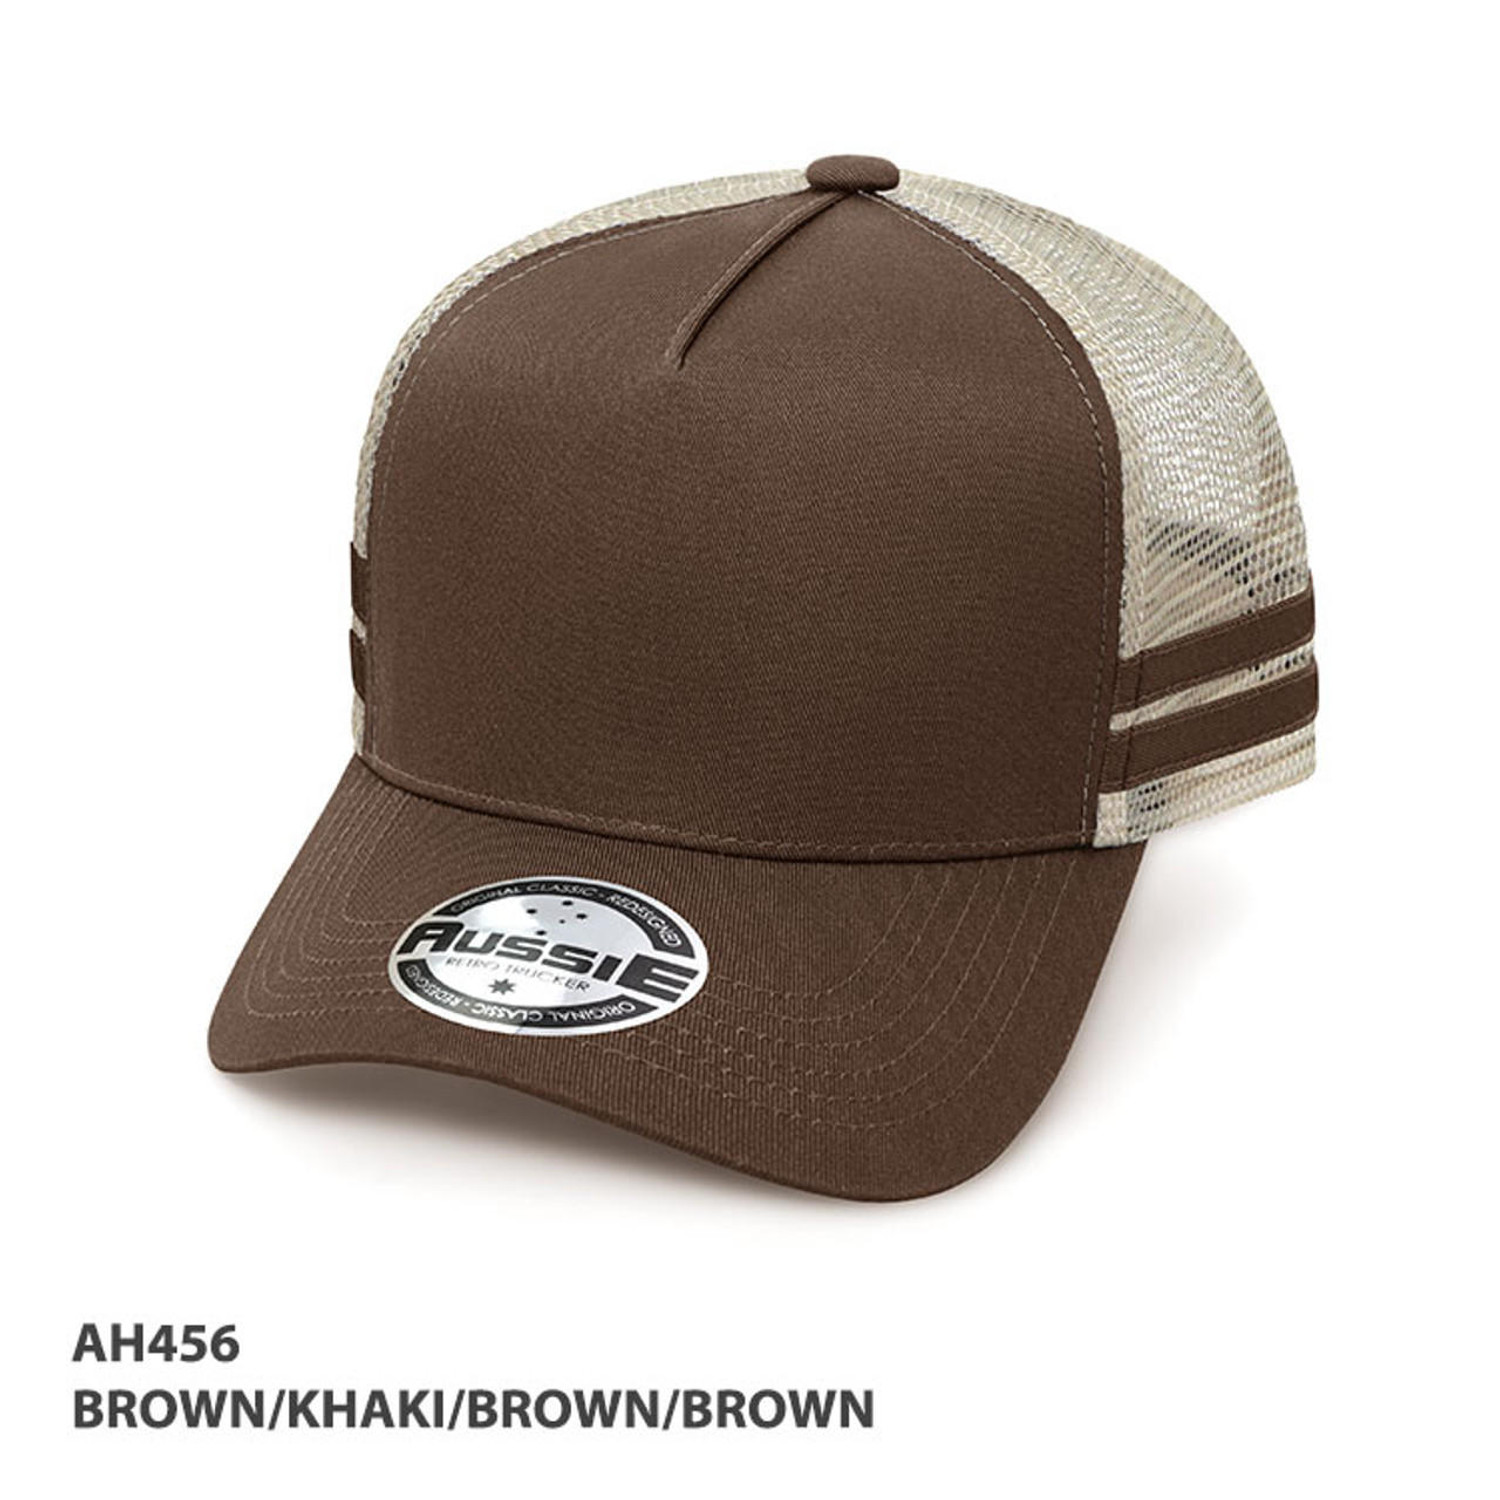  FREE EMBROIDERY - Trucker Cap in Brown/Khaki (Buy 20+) 